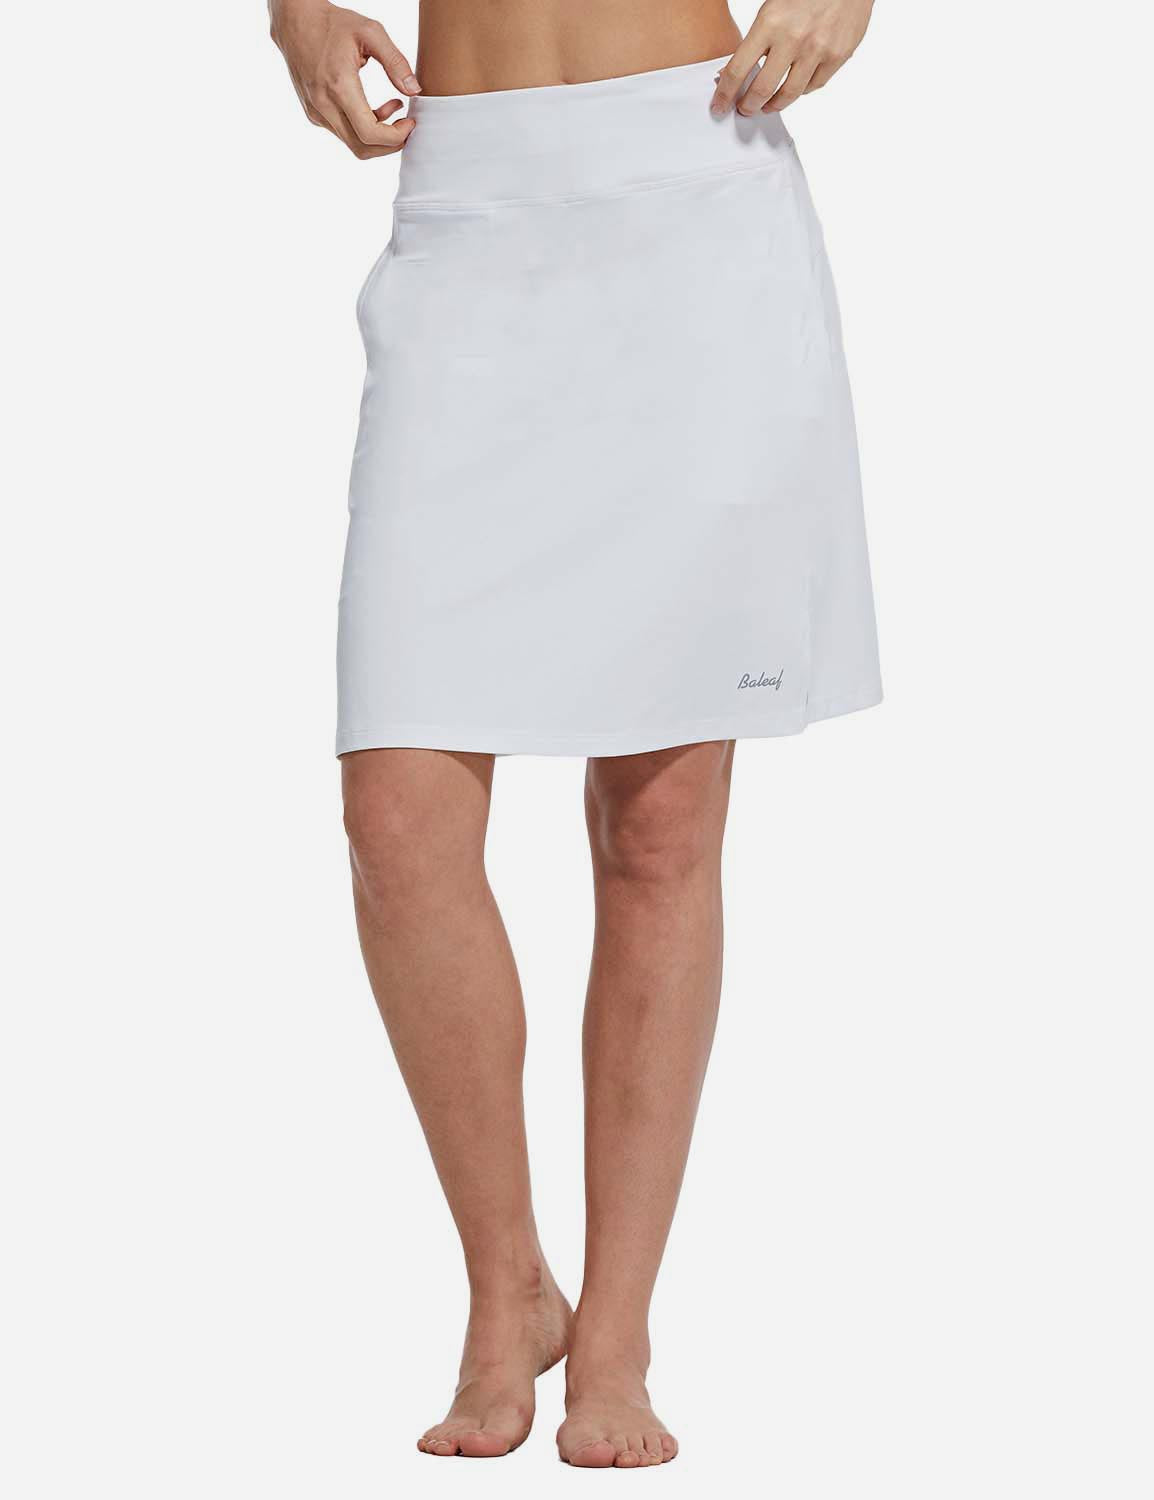 BALEAF Women's Athletic Skorts Lightweight Active Skirts with Shorts  Pockets Running Tennis Golf Workout Sports Light Pink Size XL